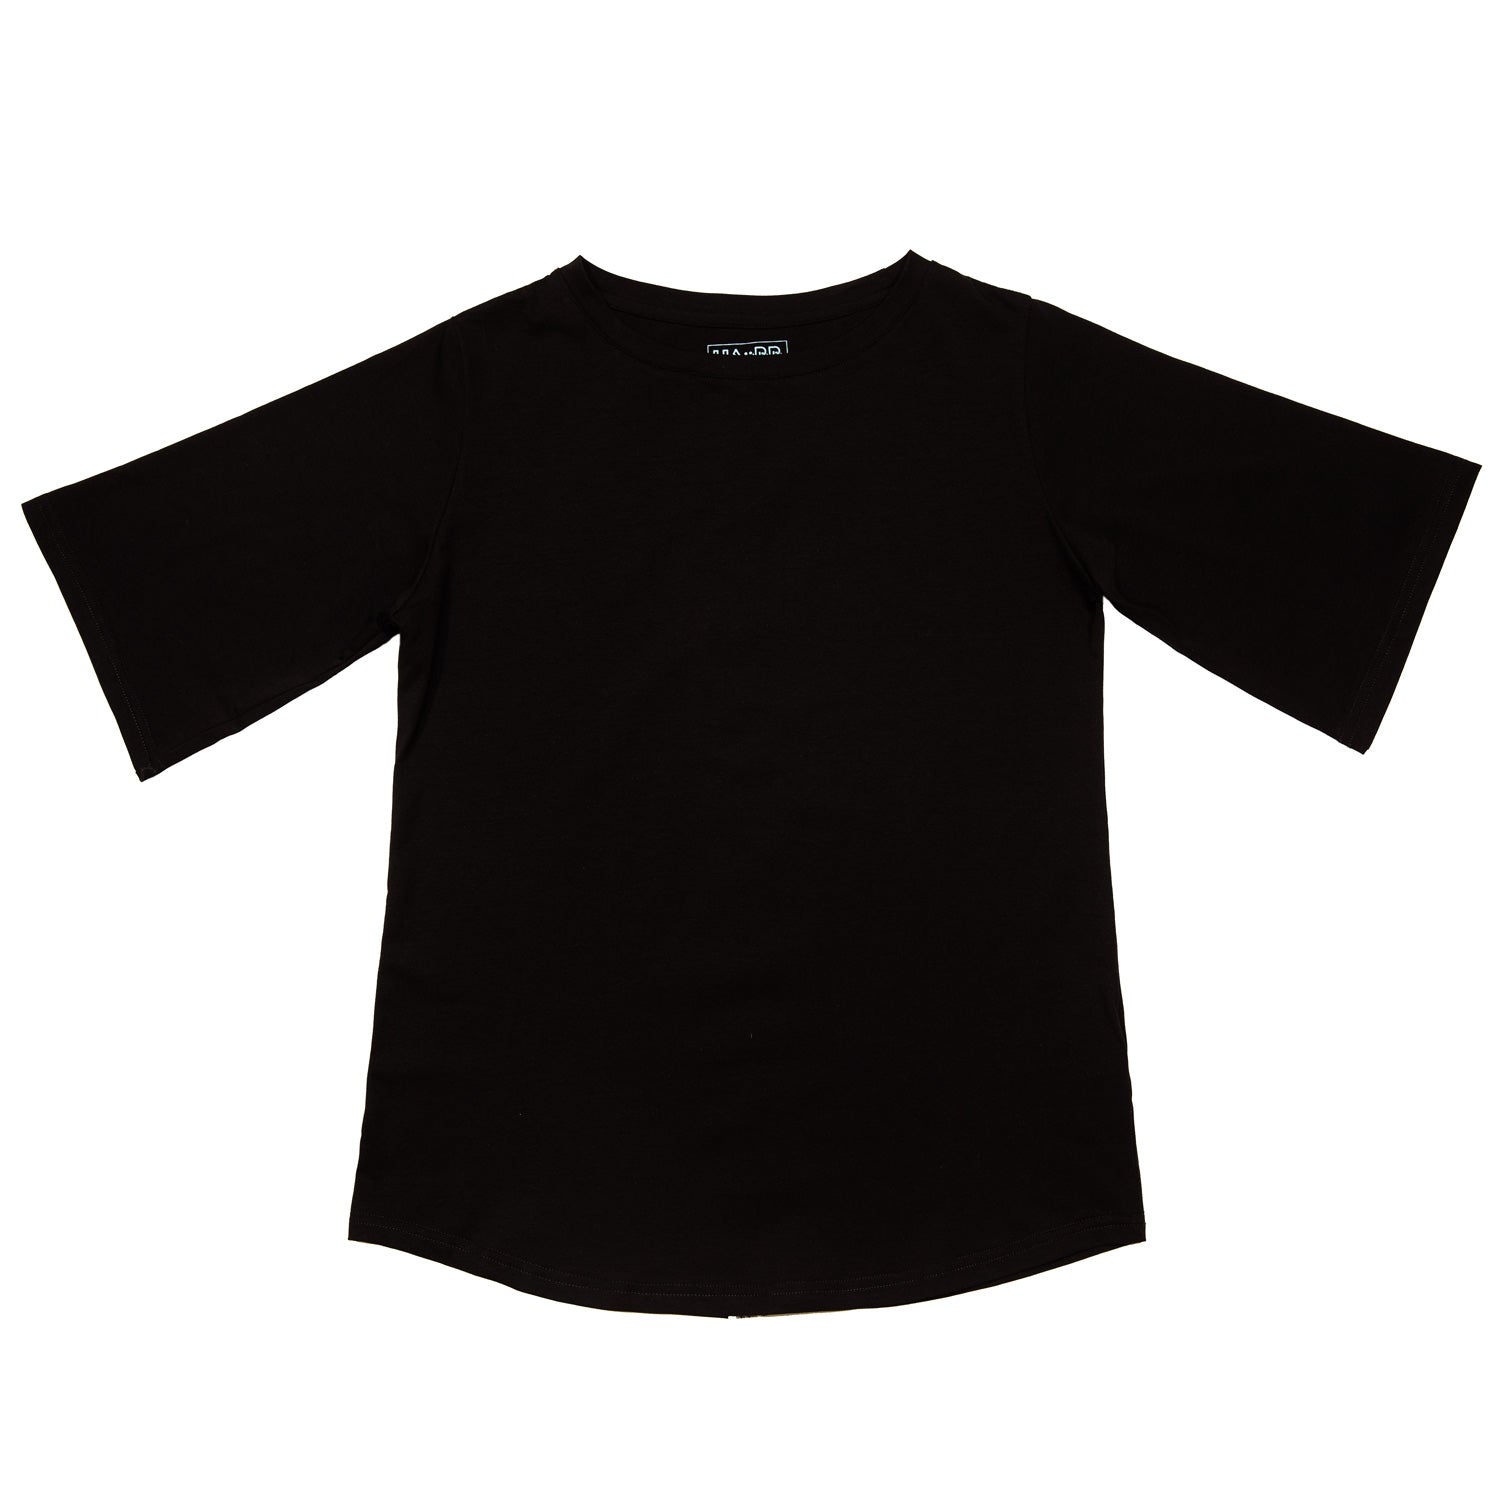 Black T-shirt, lose tee,  back print, al sadu, mudejar, Habibti, Hbb, habb, short sleeves, woman, ladies 